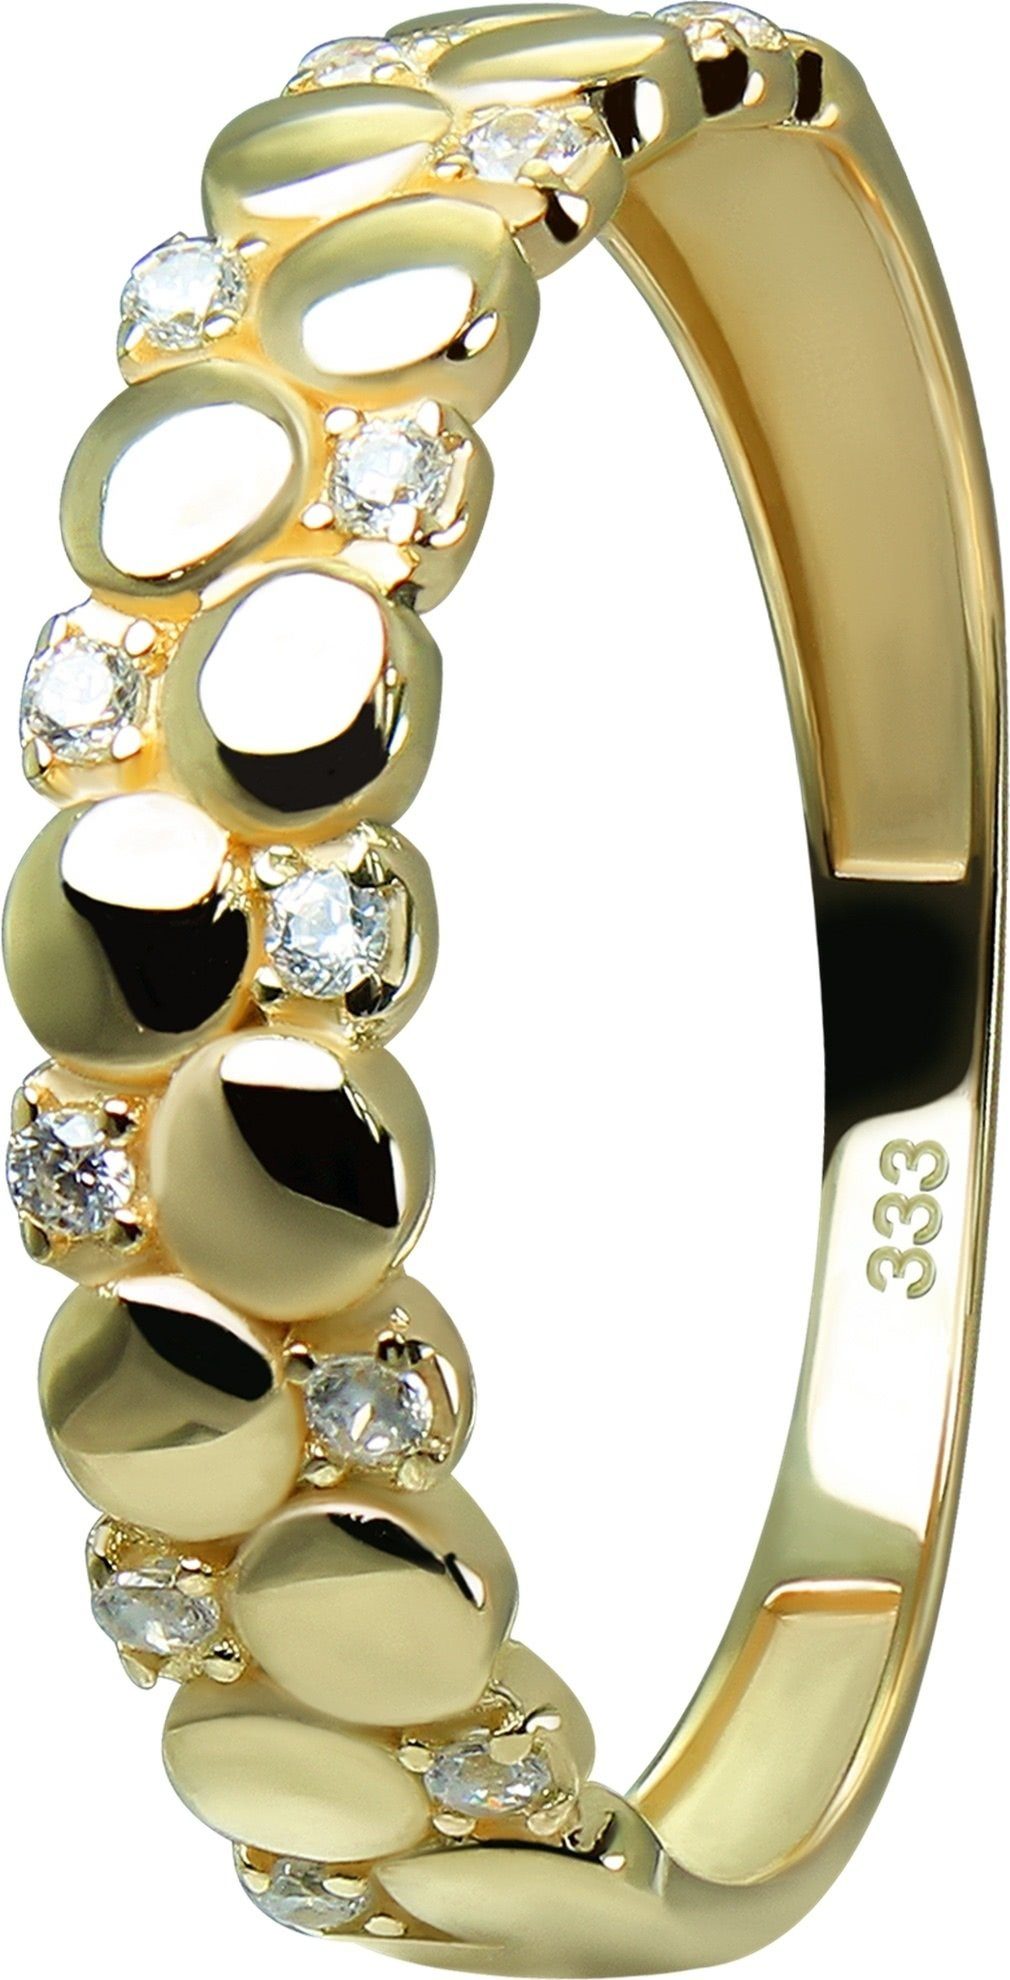 333 Goldring Karat, Gelbgold GoldDream Gold GoldDream Zirkonia Farbe: gold, - 8 Ring Gr.56 Damen Dots Dots weiß (Fingerring), Ring